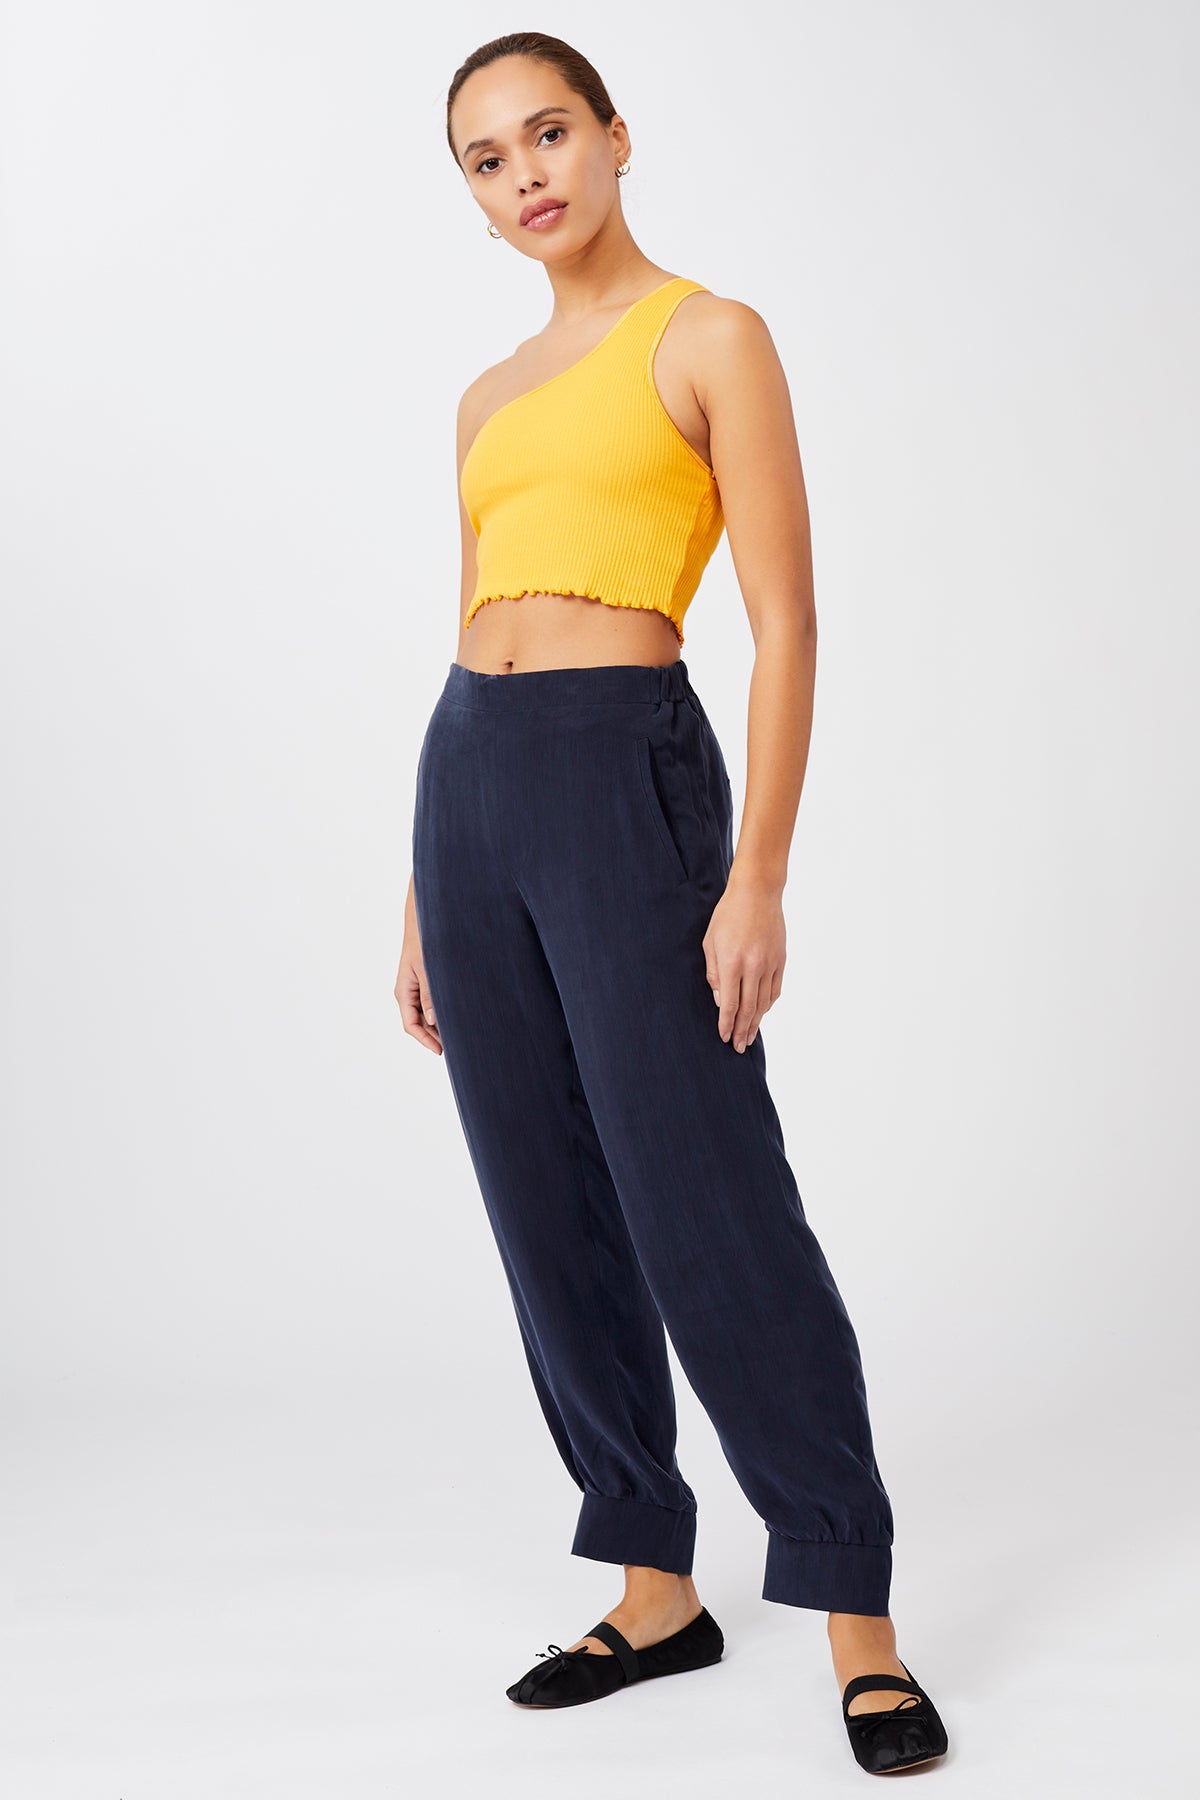 Mandala Yoga Pant Blau Outfit Front - Milan Pants